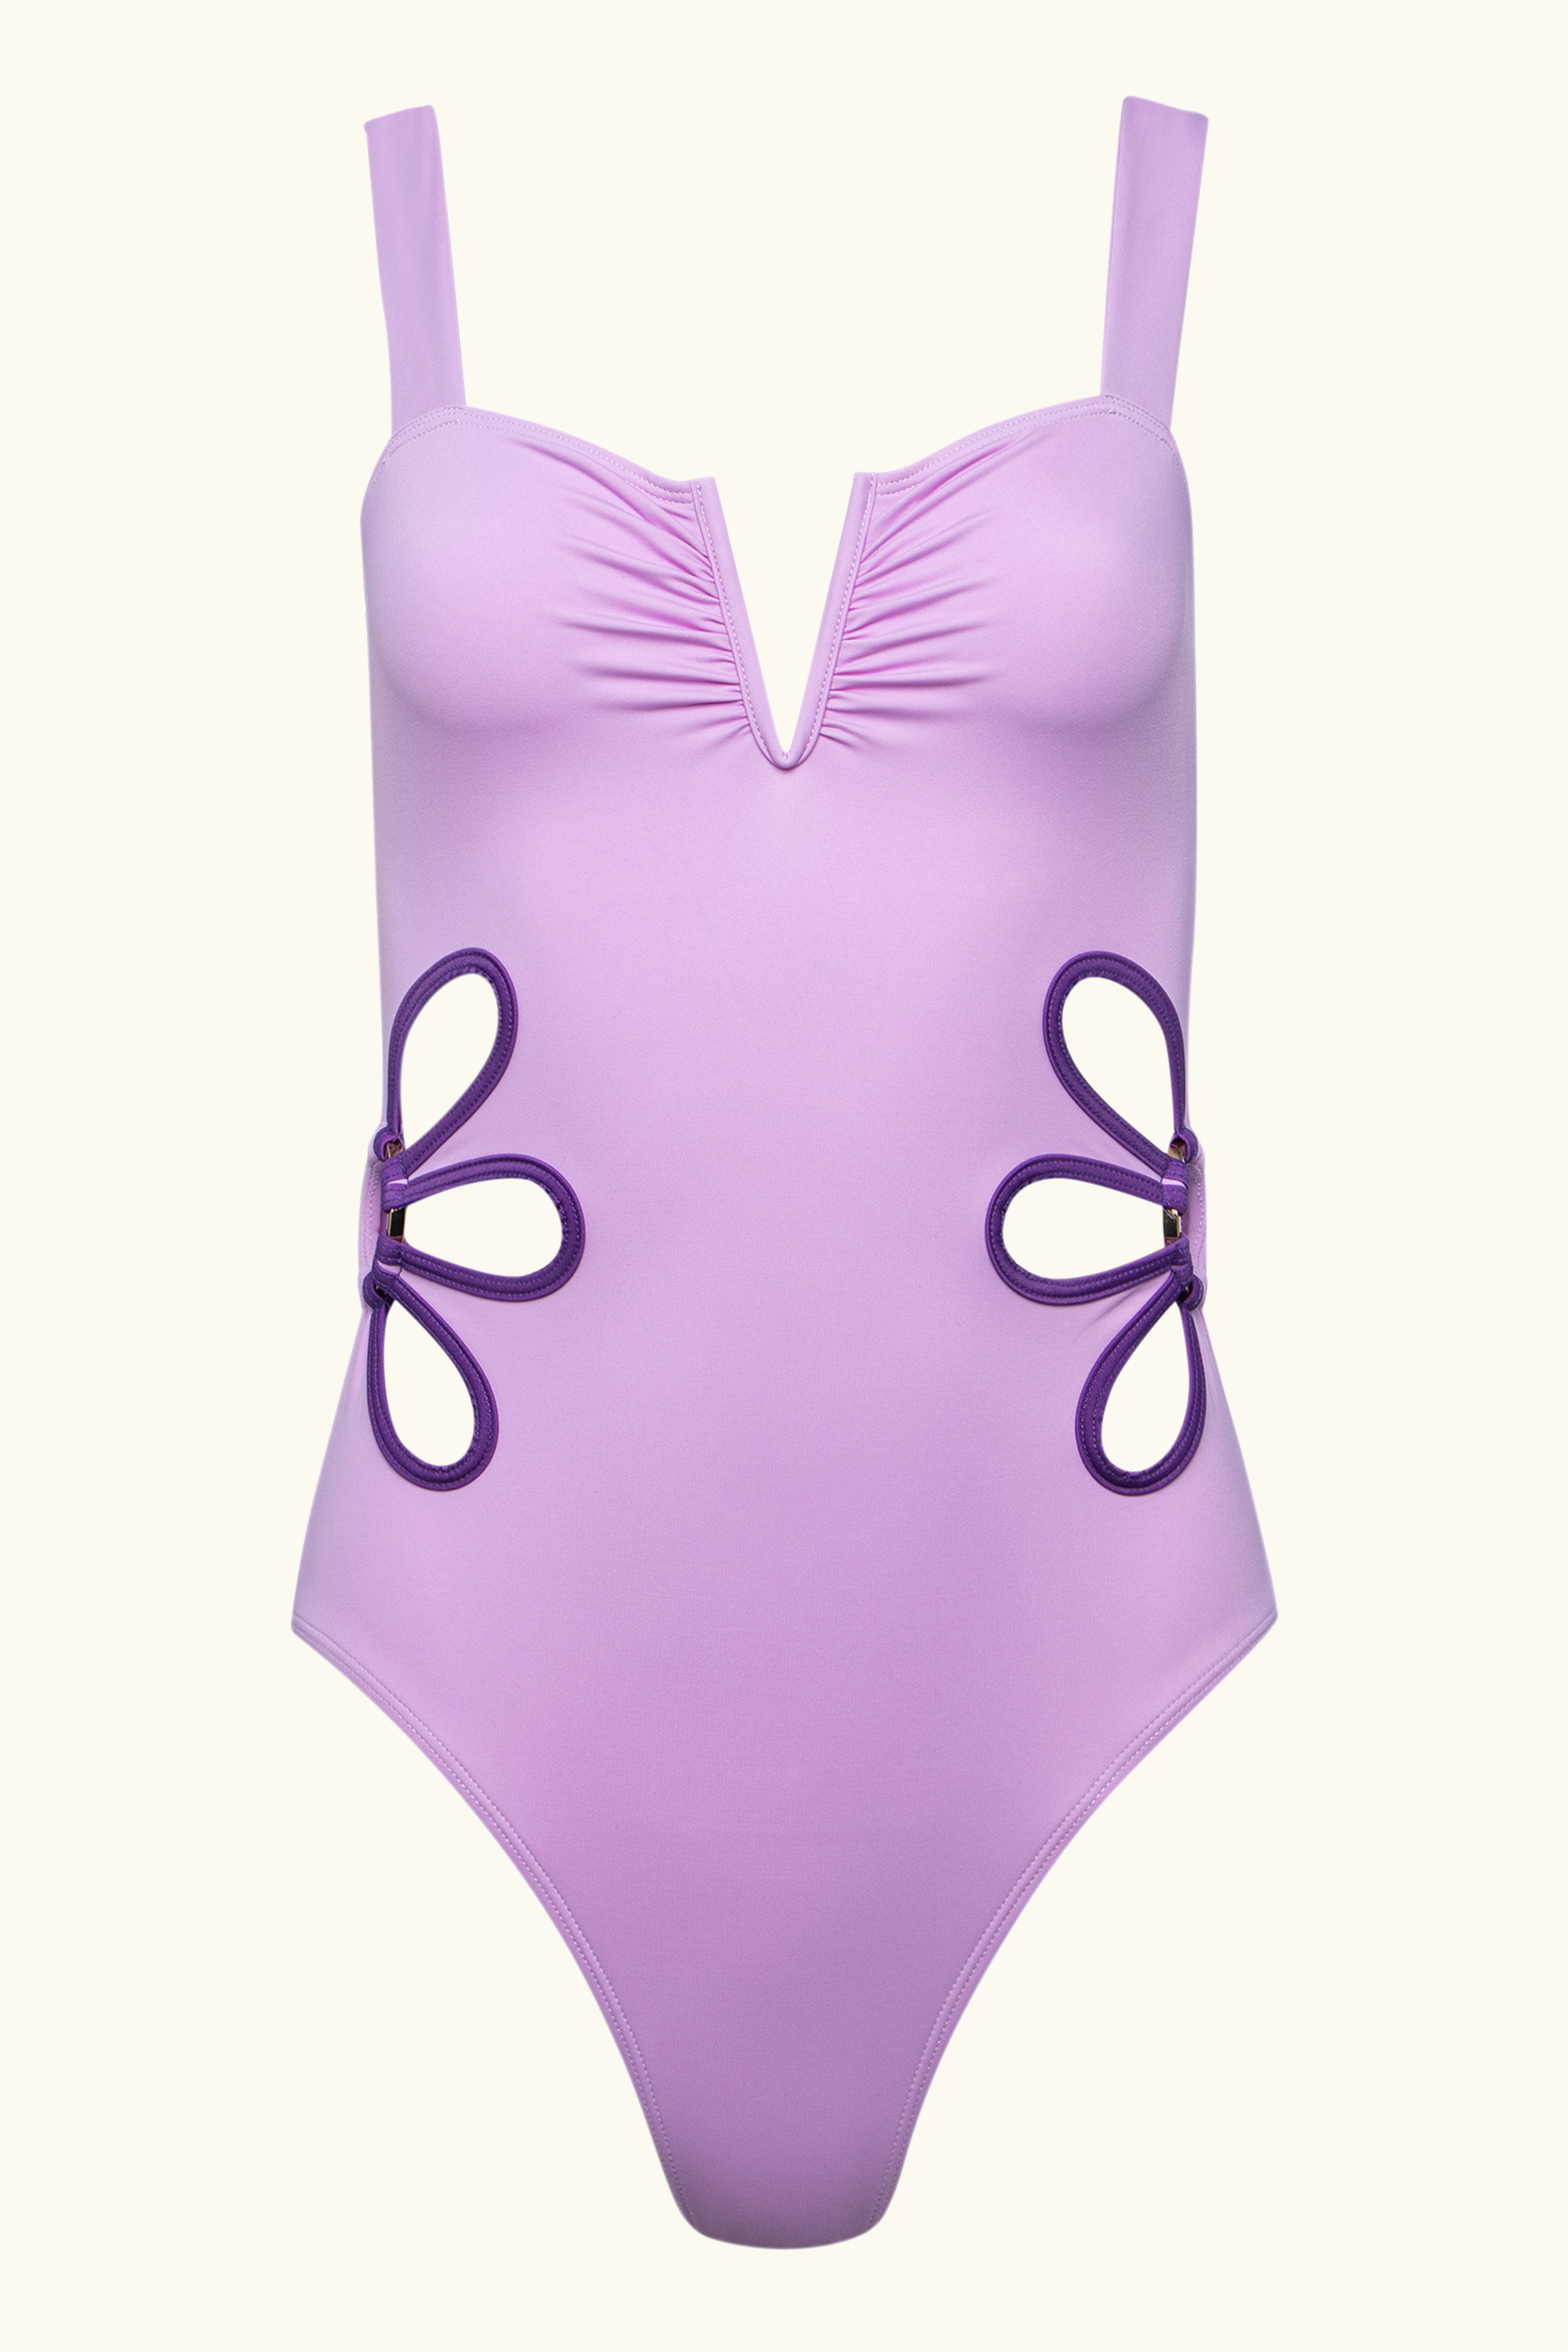 lilac purple one piece bathing suit flower cutouts 90s inspired swimwear